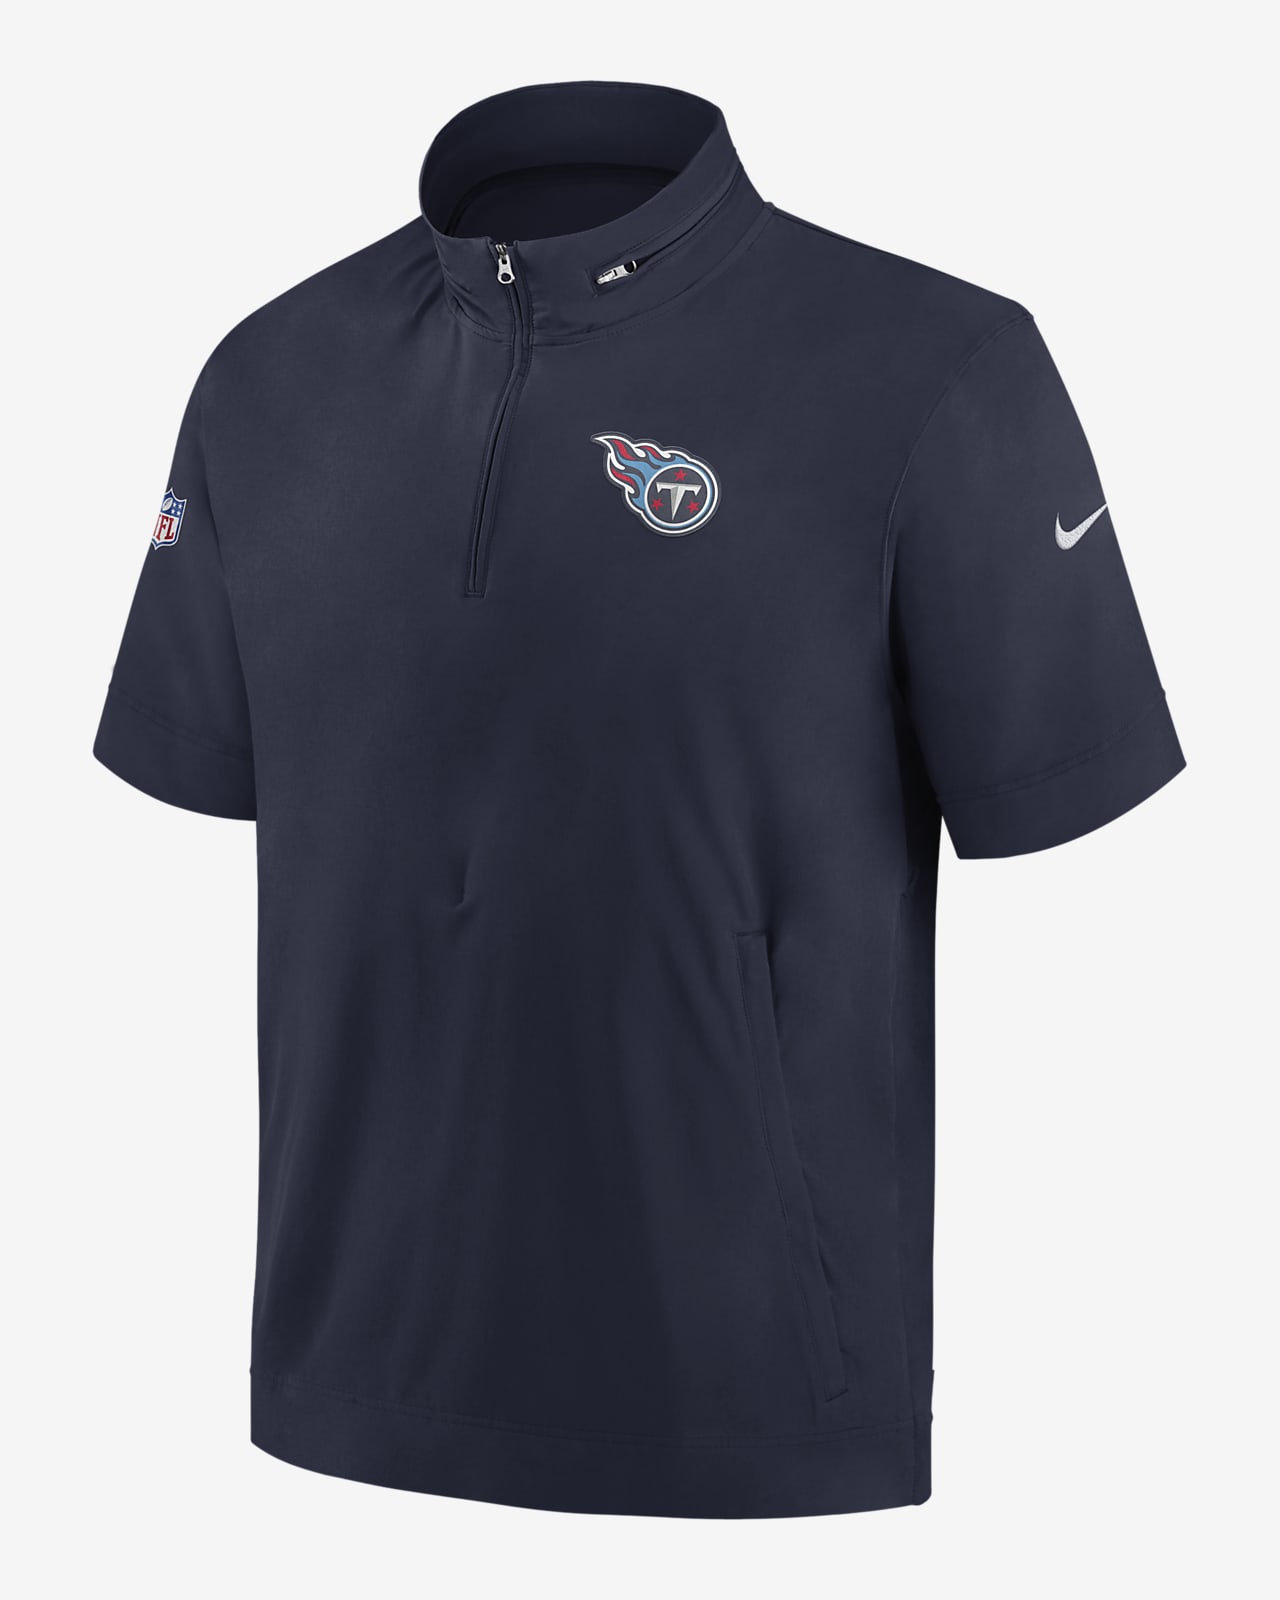 Nike Sideline Coach (NFL Tennessee Titans) Men's Short-Sleeve Jacket